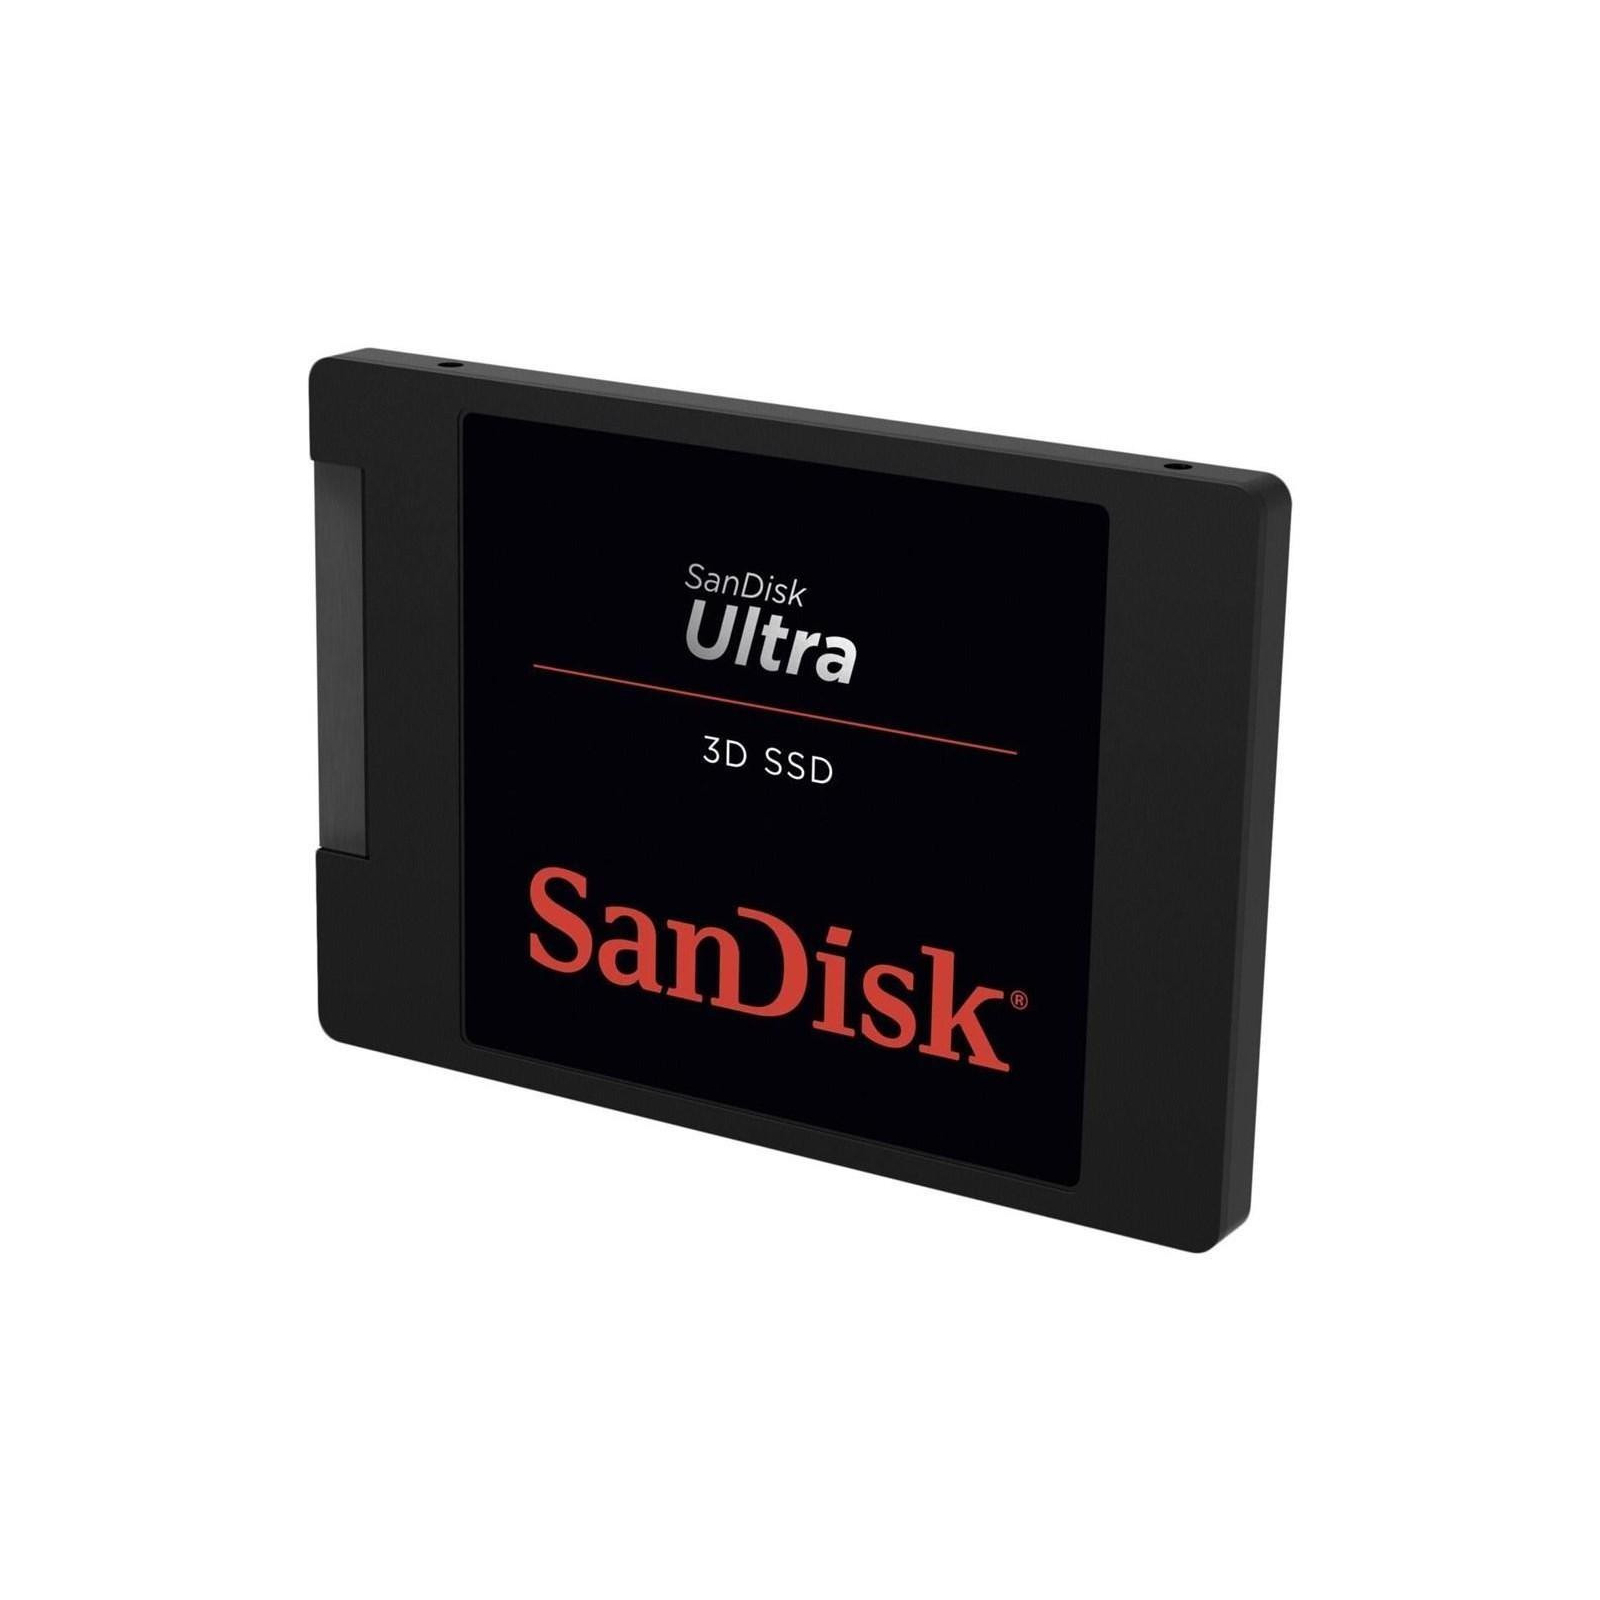 Накопитель SSD 2.5" 250GB SanDisk (SDSSDH3-250G-G25) изображение 2